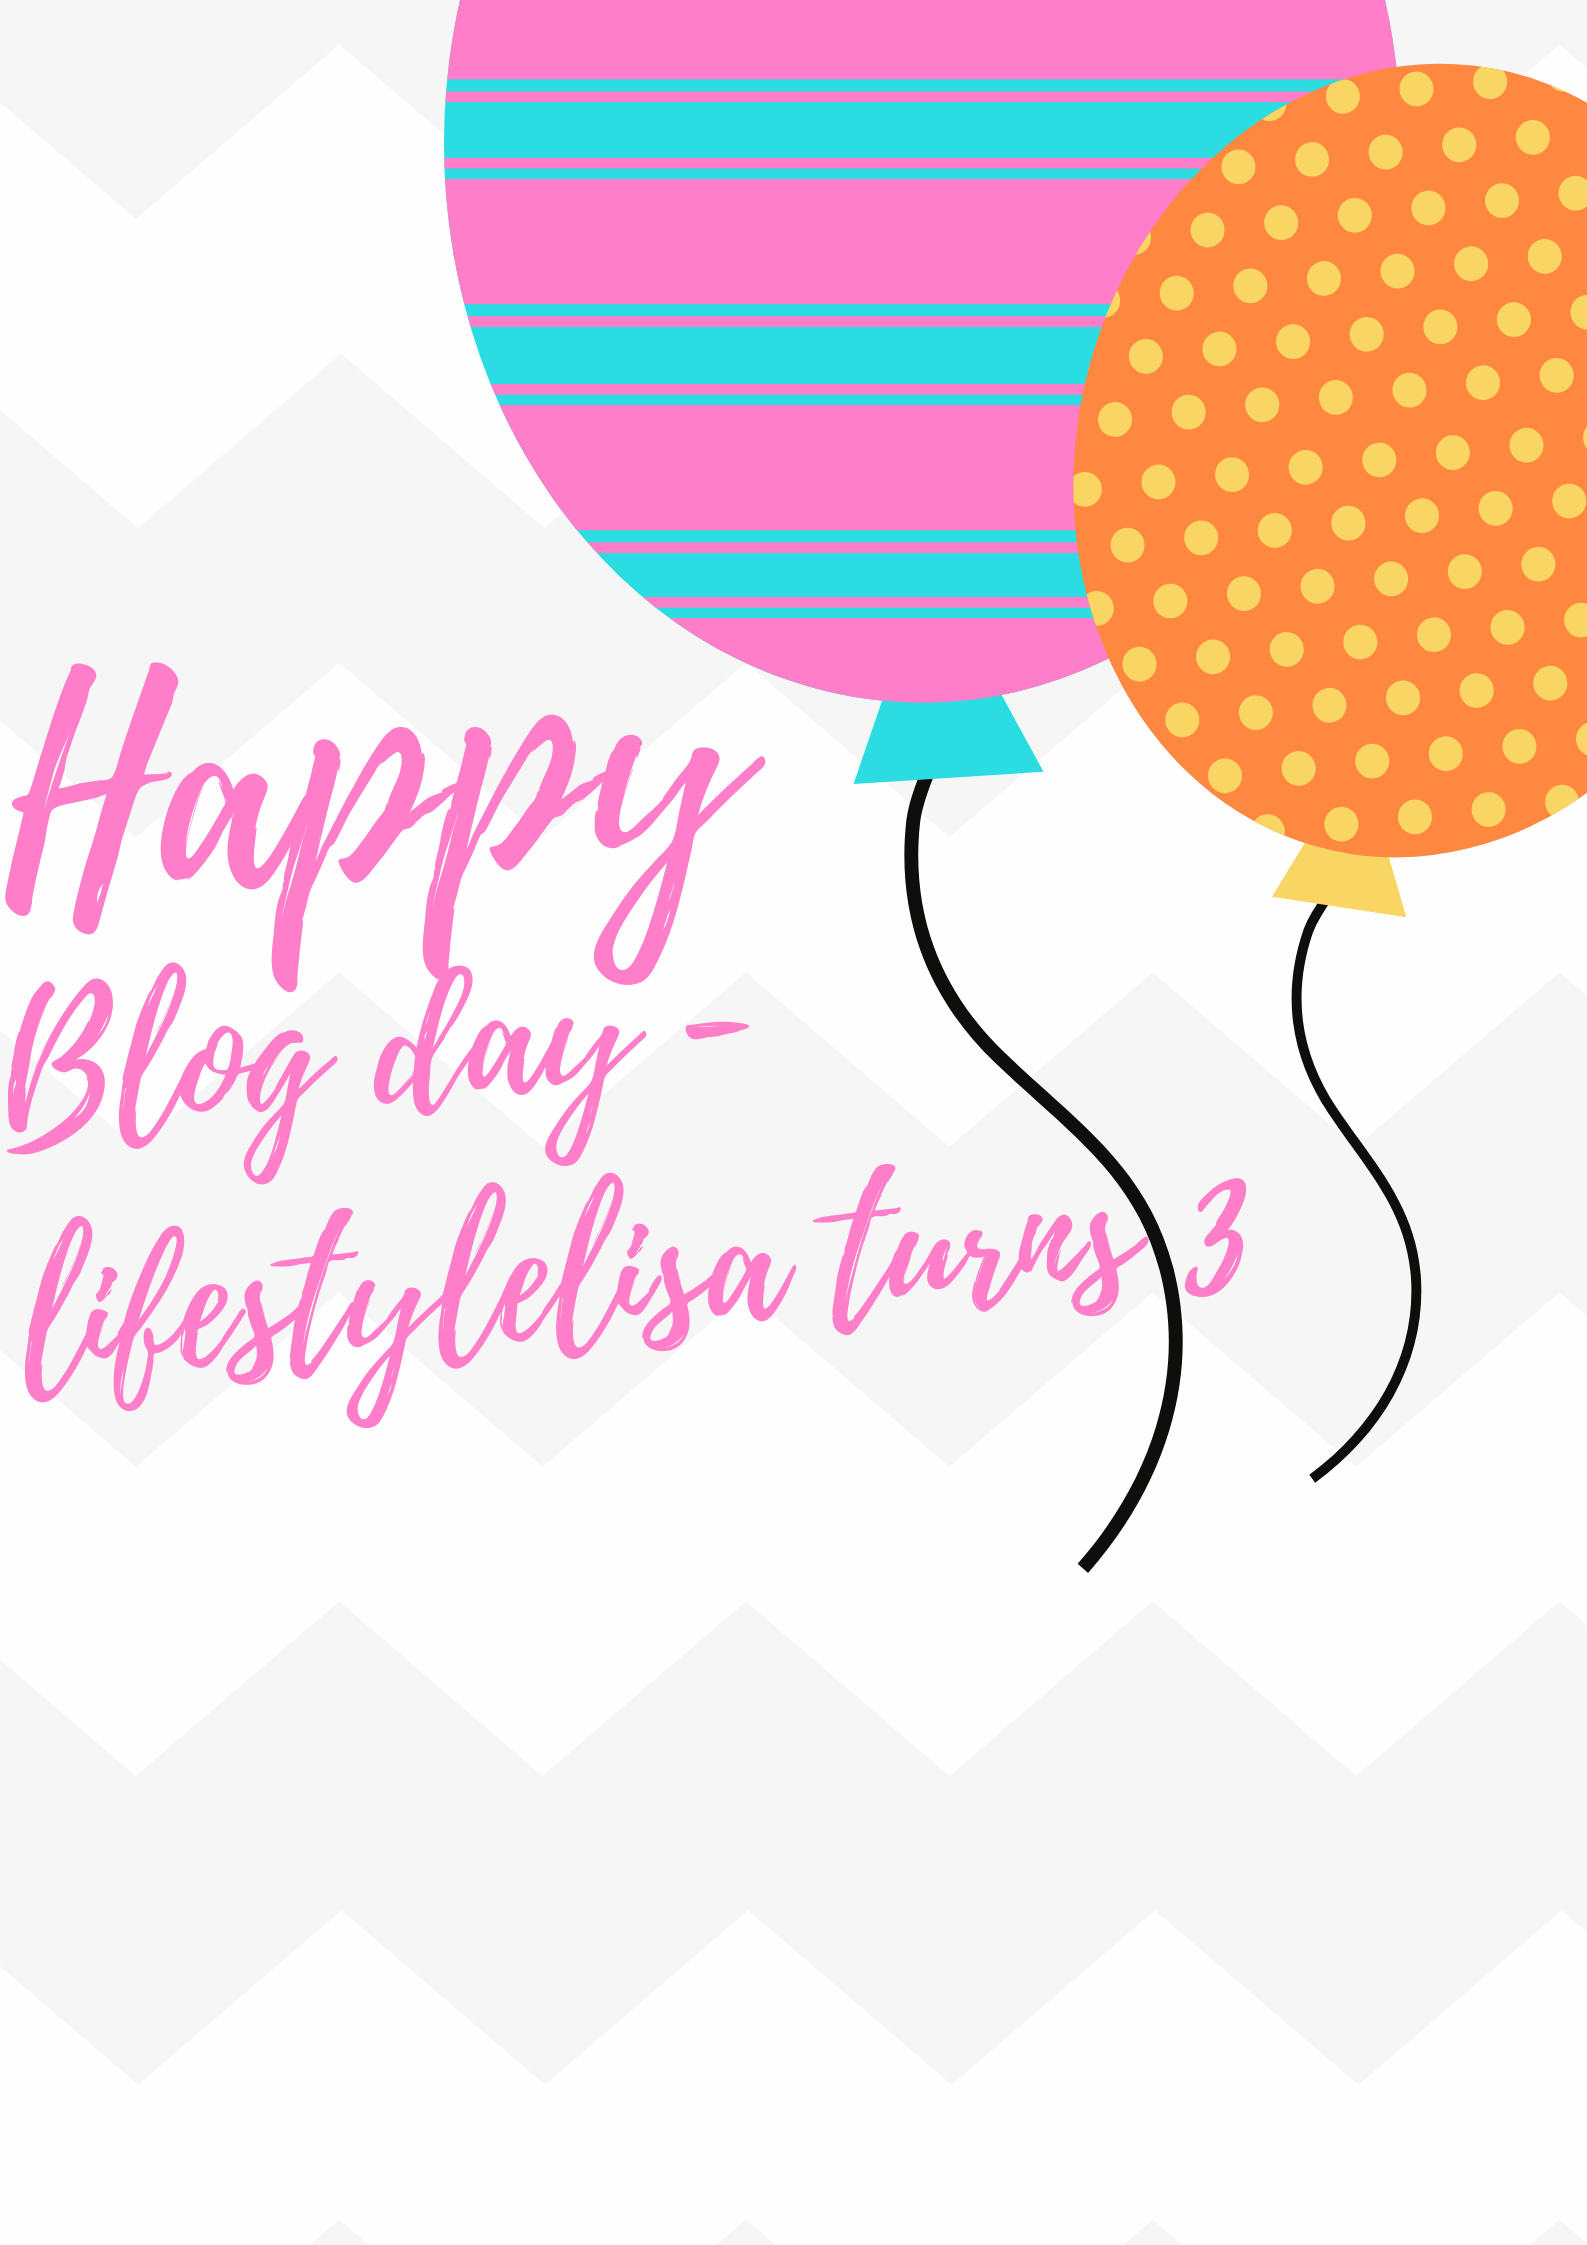 Happy Blog Day – Lifestylelisa Turns 3